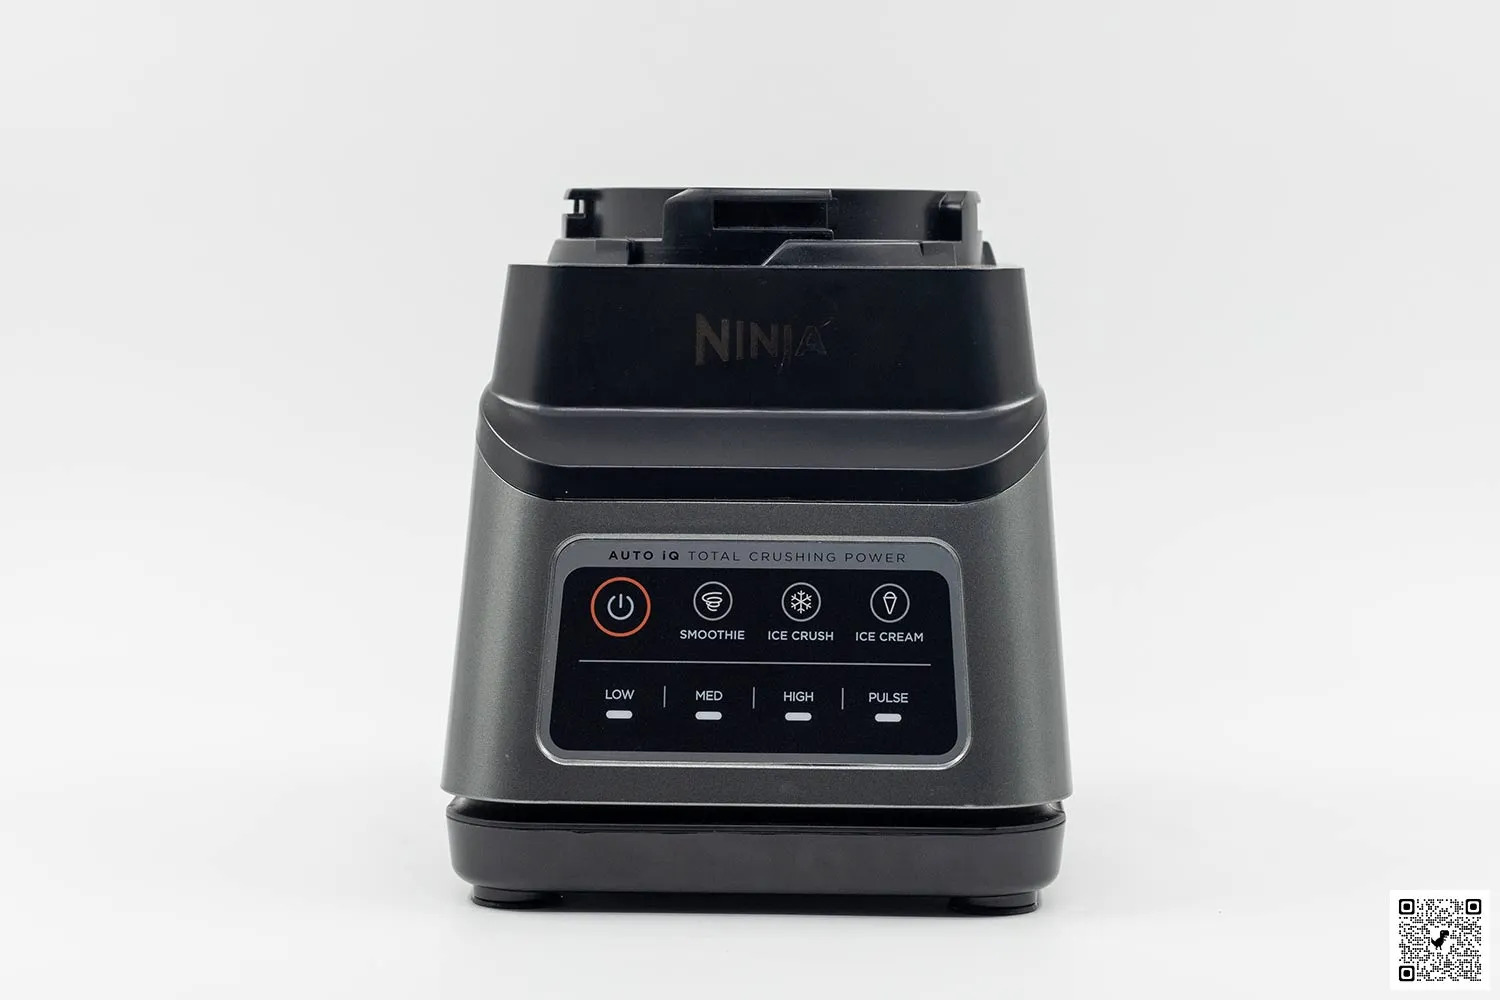 Ninja Professional Plus Blender with Auto-iQ in Grey